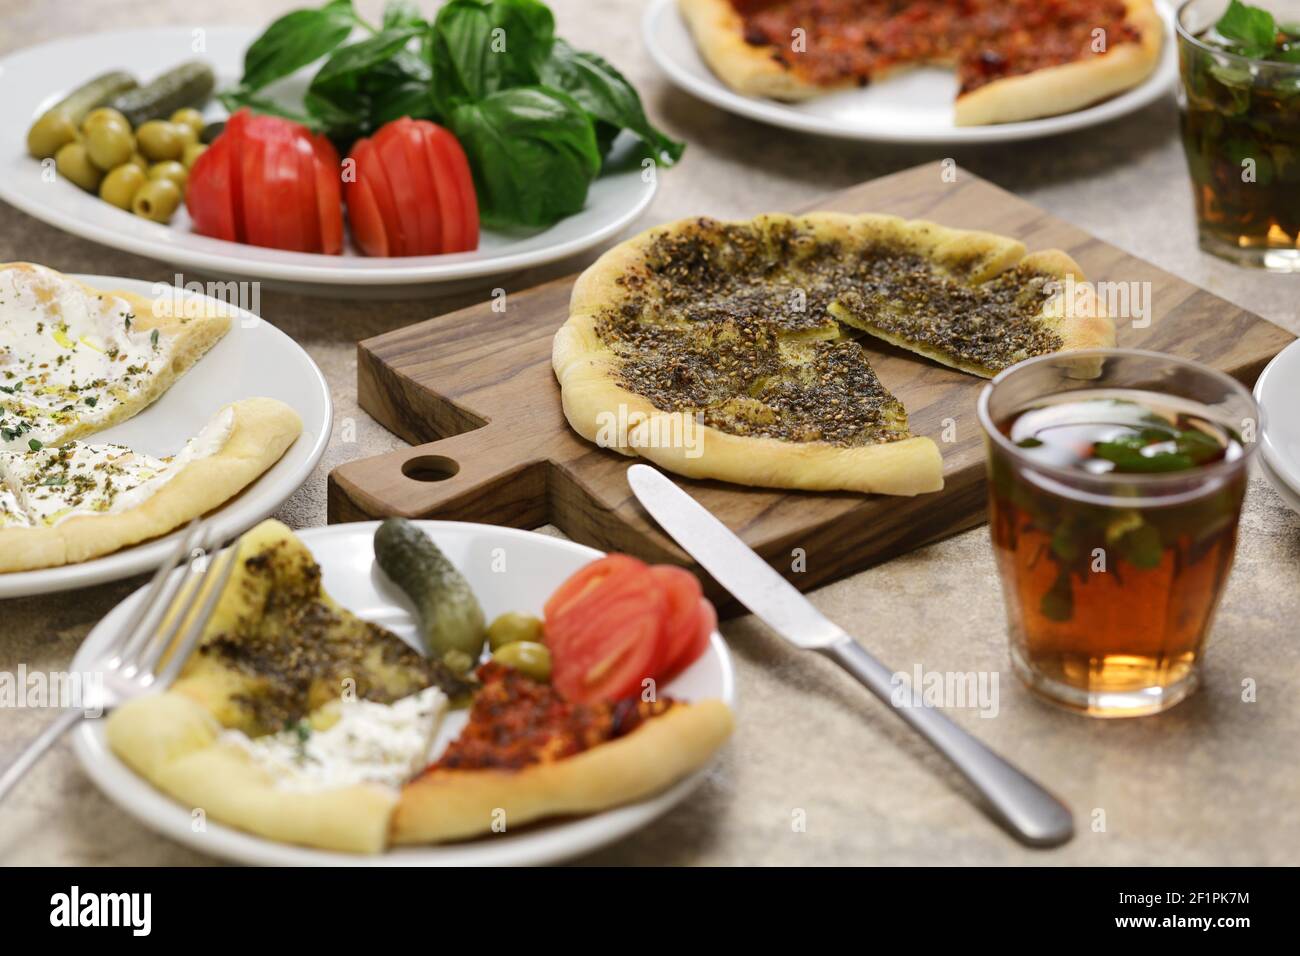 manakeesh, pizza lebantine, condimento con zaatar (timo), labneh (yogurt strained) e manzo groud Foto Stock